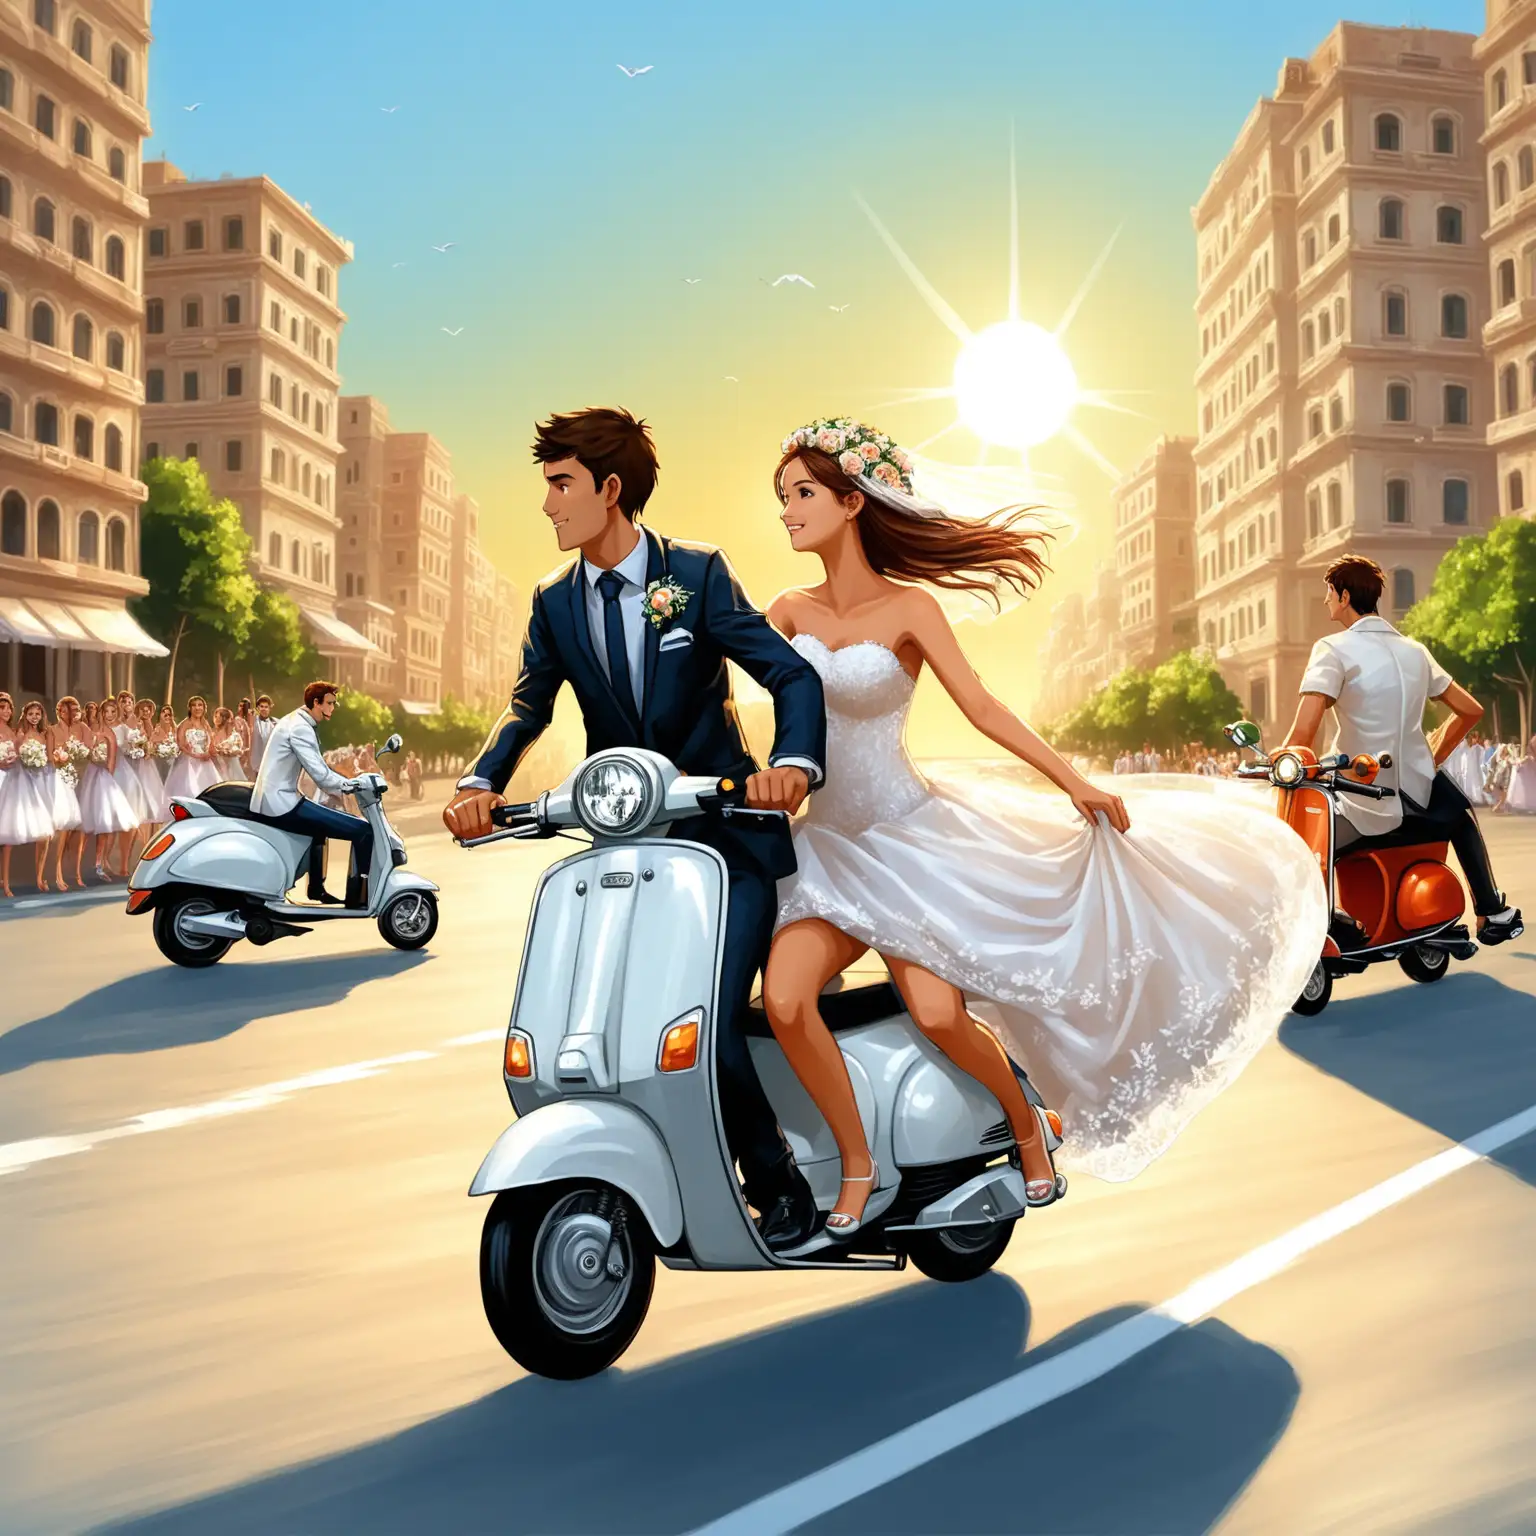 Sunny-City-Scooter-Race-Wedding-Dressed-Duo-Speeding-Along-the-Seaside